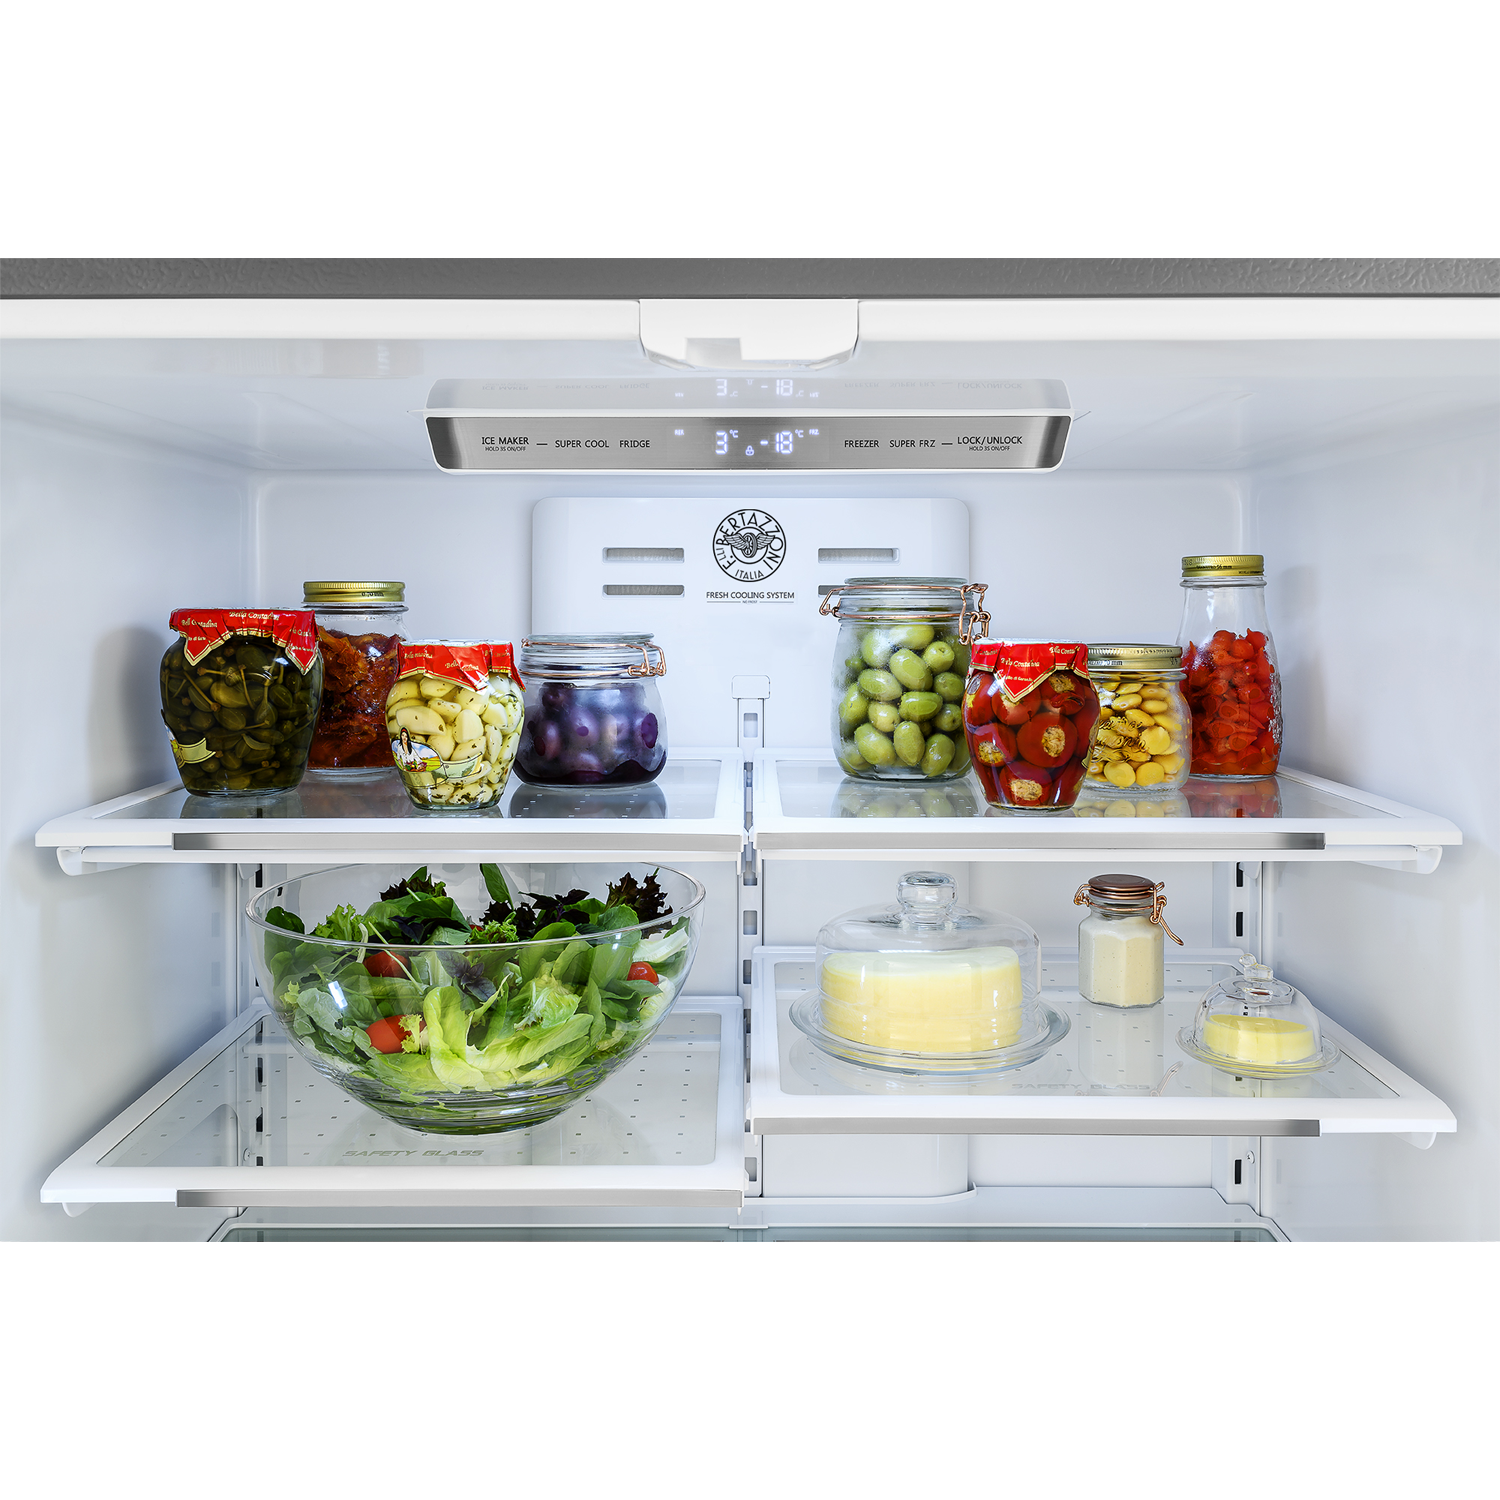 refrigerador-frenchdoor-bertazzoni-professional-91cm-636l-led